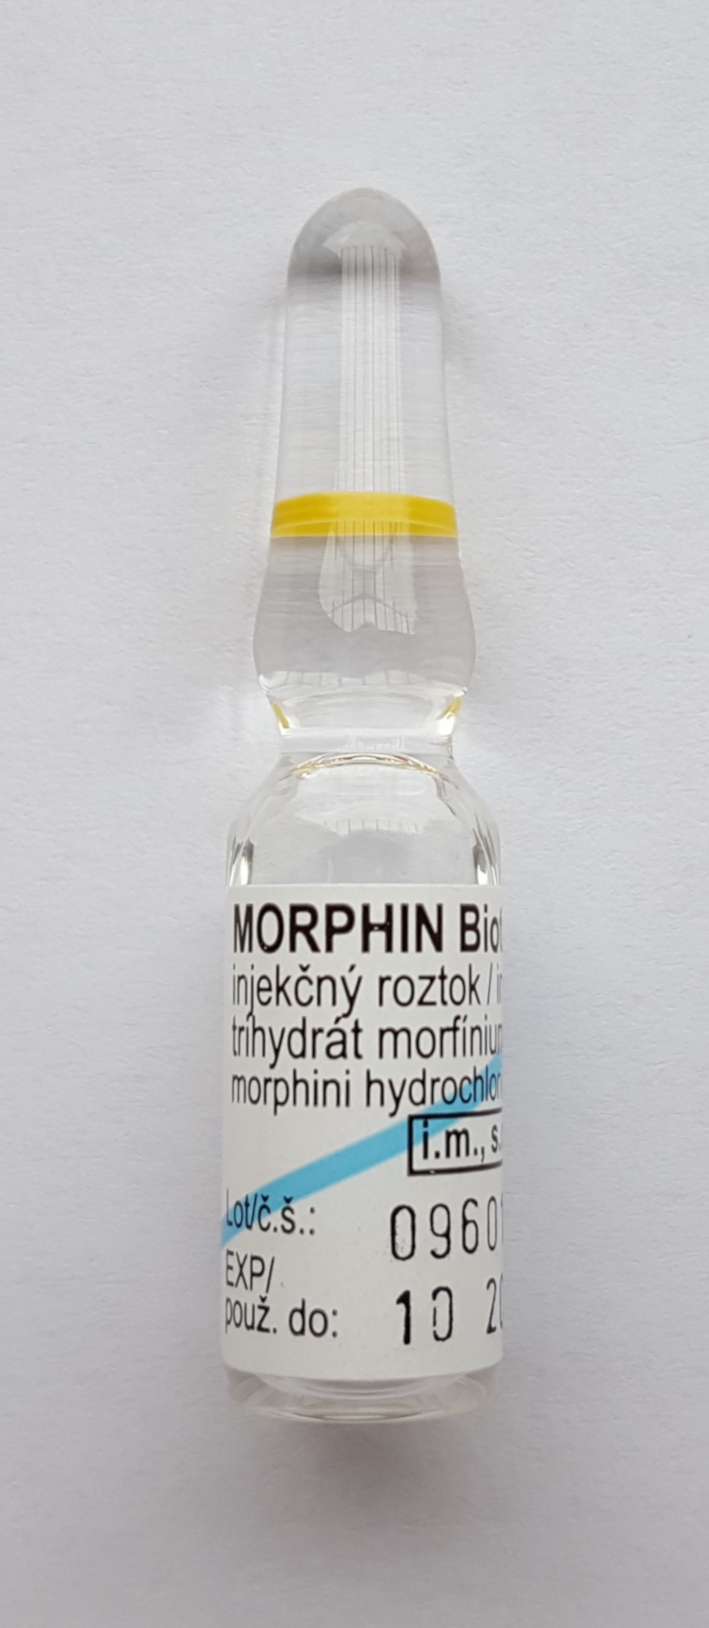 Morfin tlumí nesnesitelné bolesti.